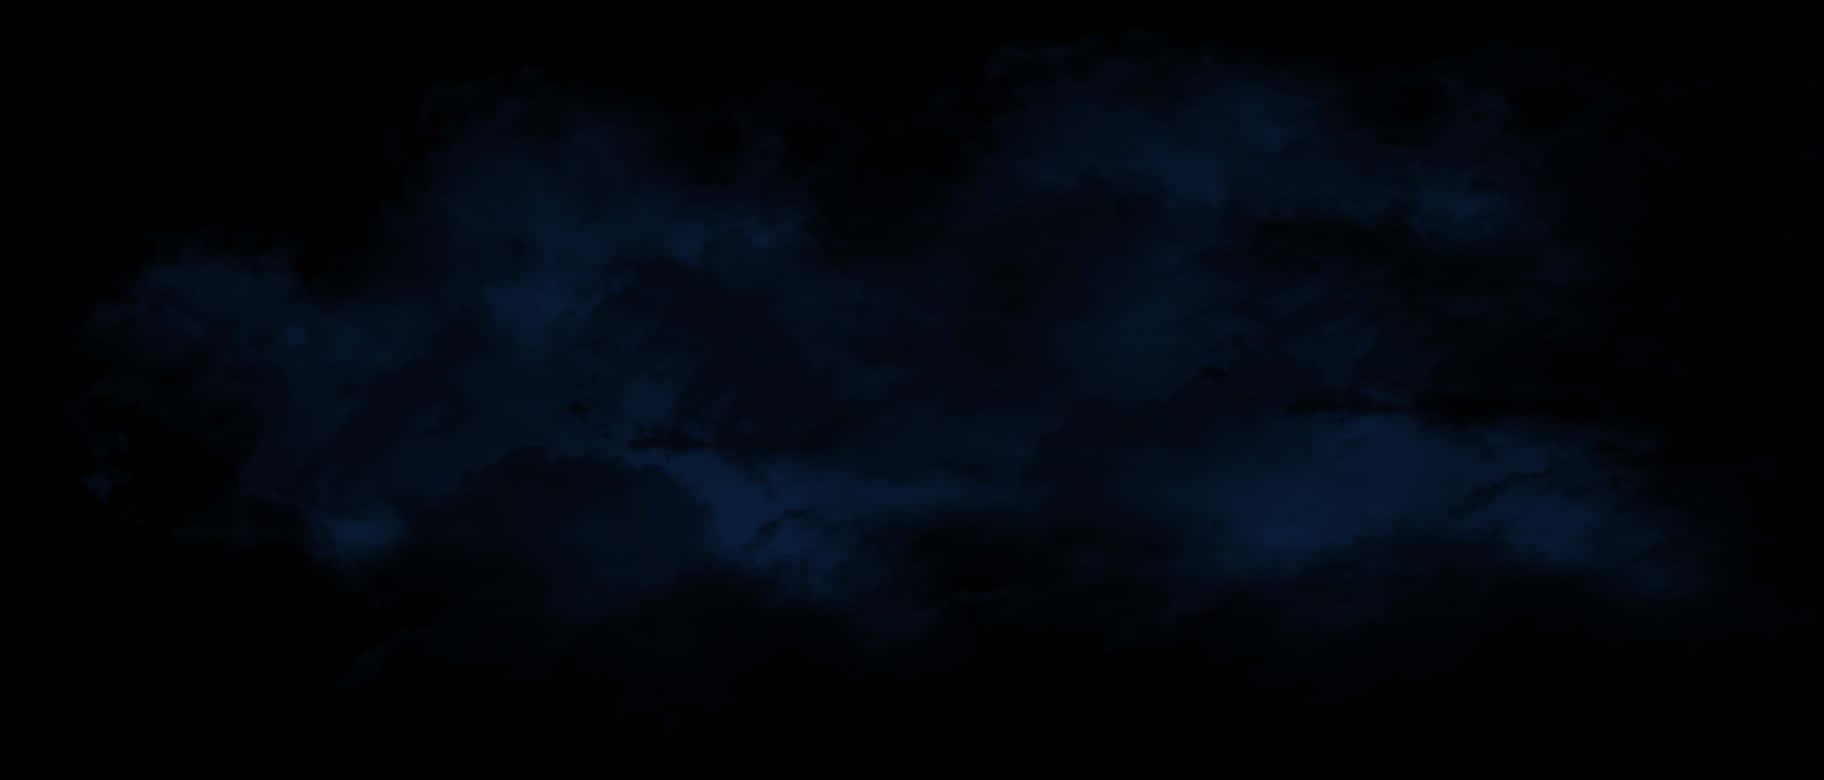 A Dark Blue Smoke On A Black Background